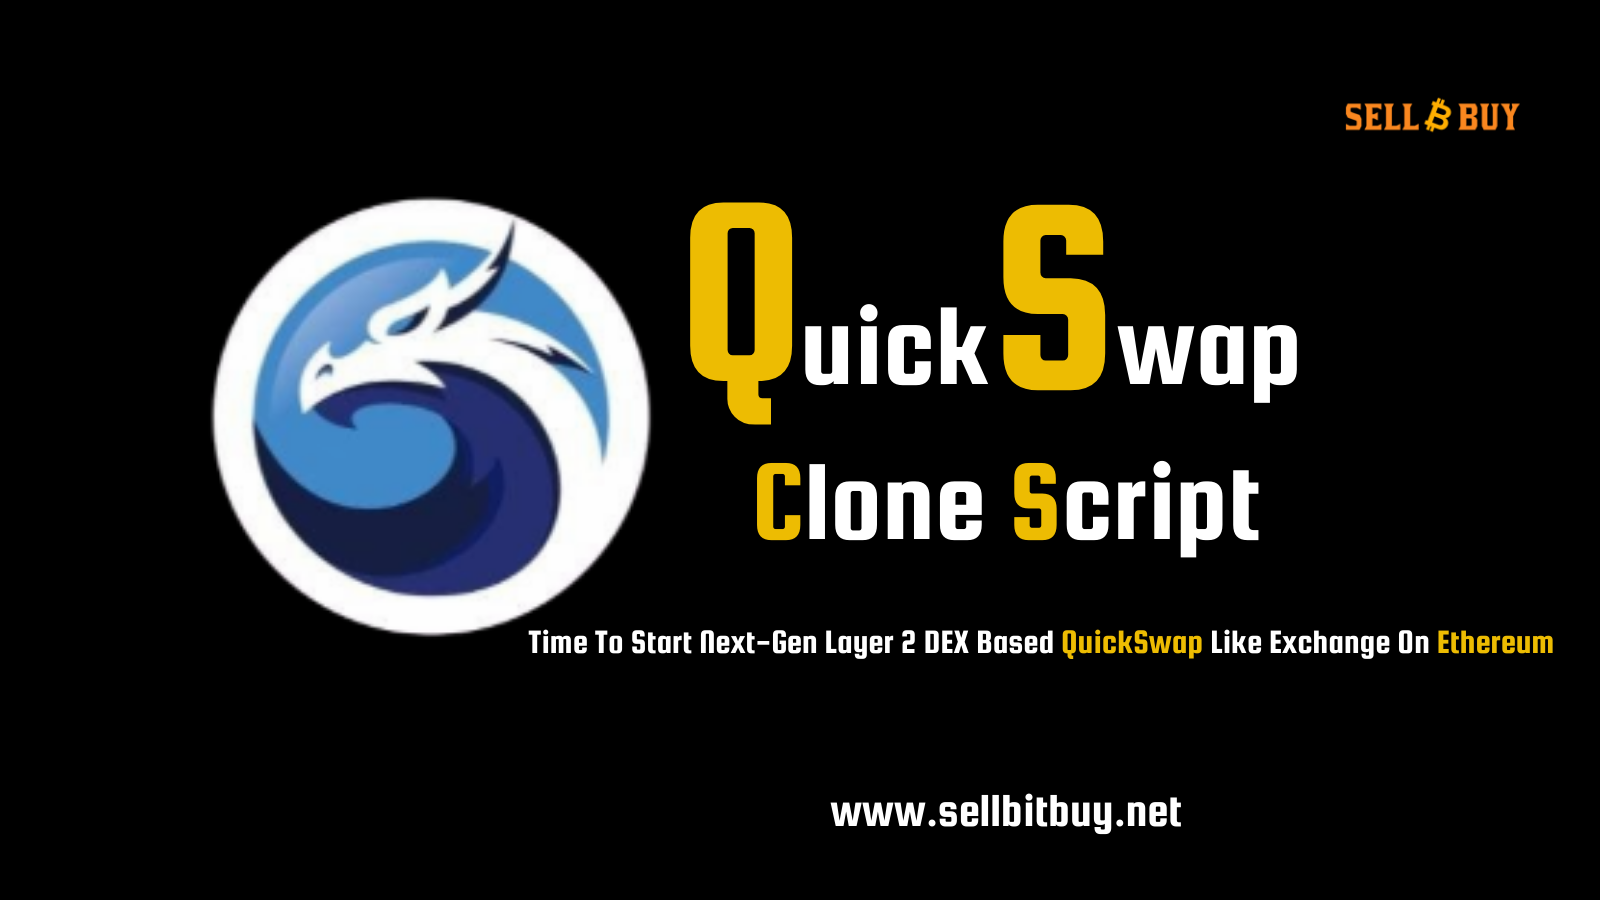 QuickSwap Clone Script - Unique Approach To Launch QuickSwap like Decentralized Exchange On Matic Blockchain